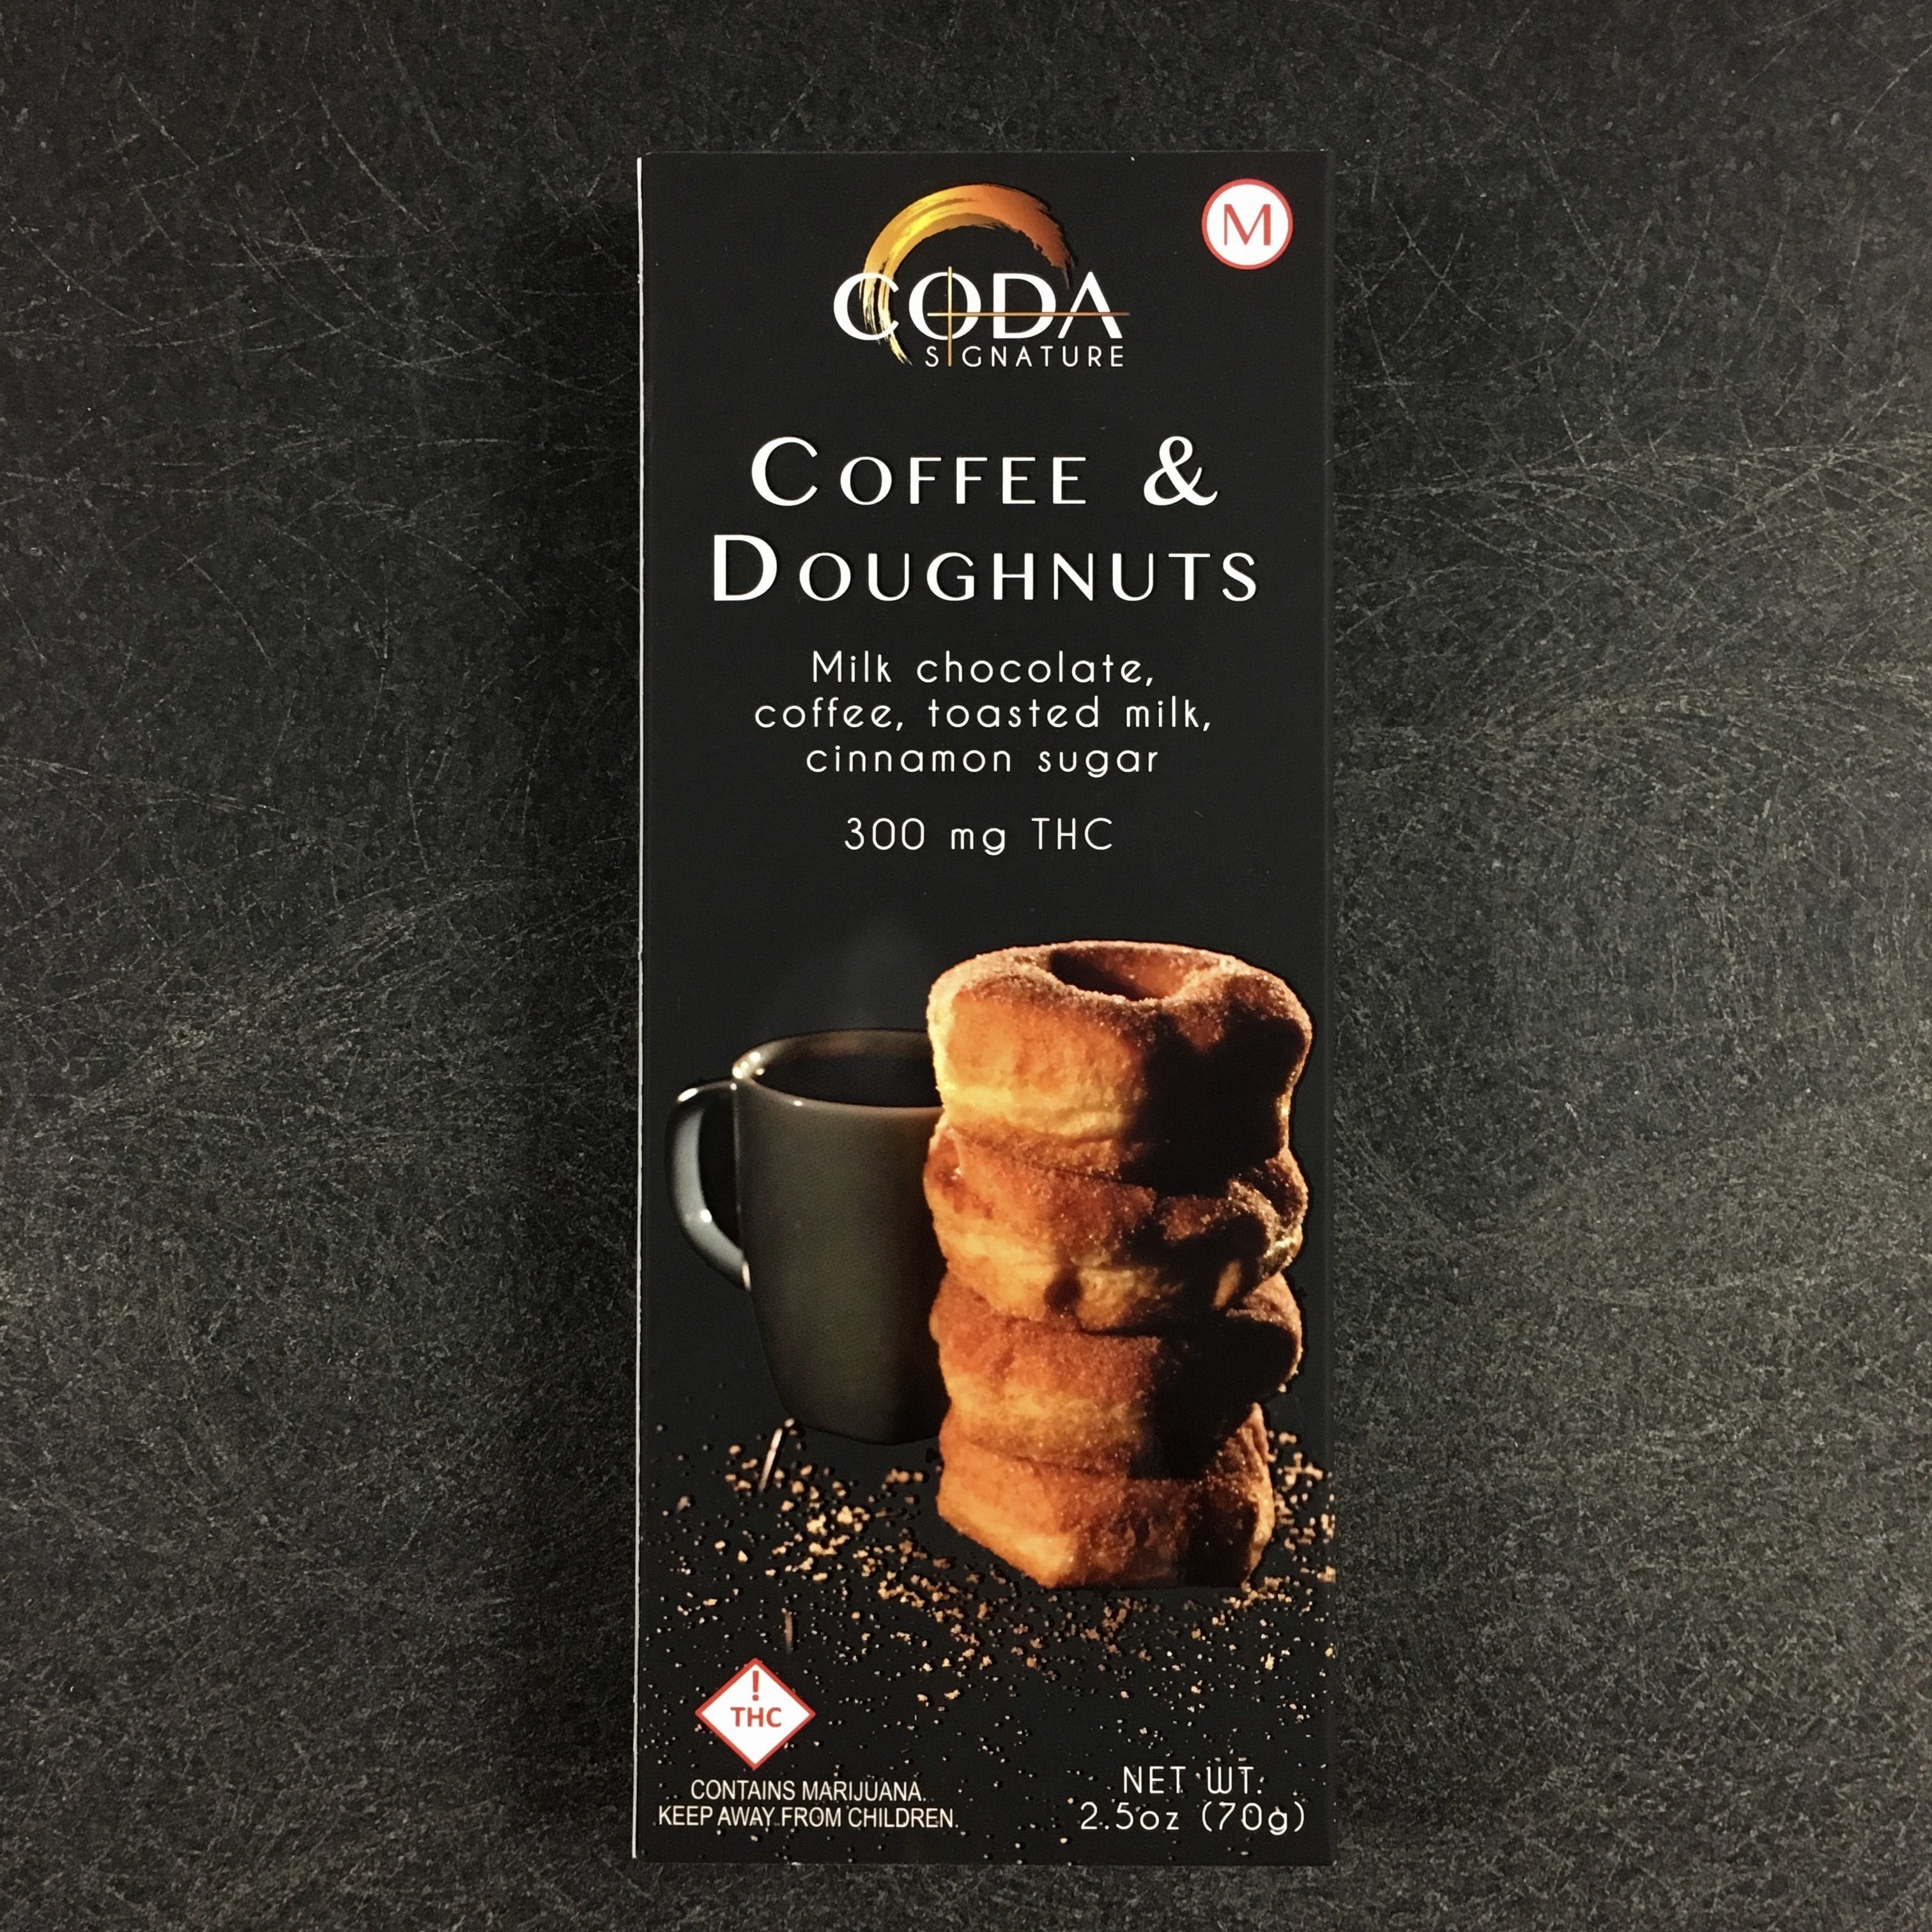 edible-coda-signature-2c-coffee-a-doughnuts-chocolate-2c-300mg